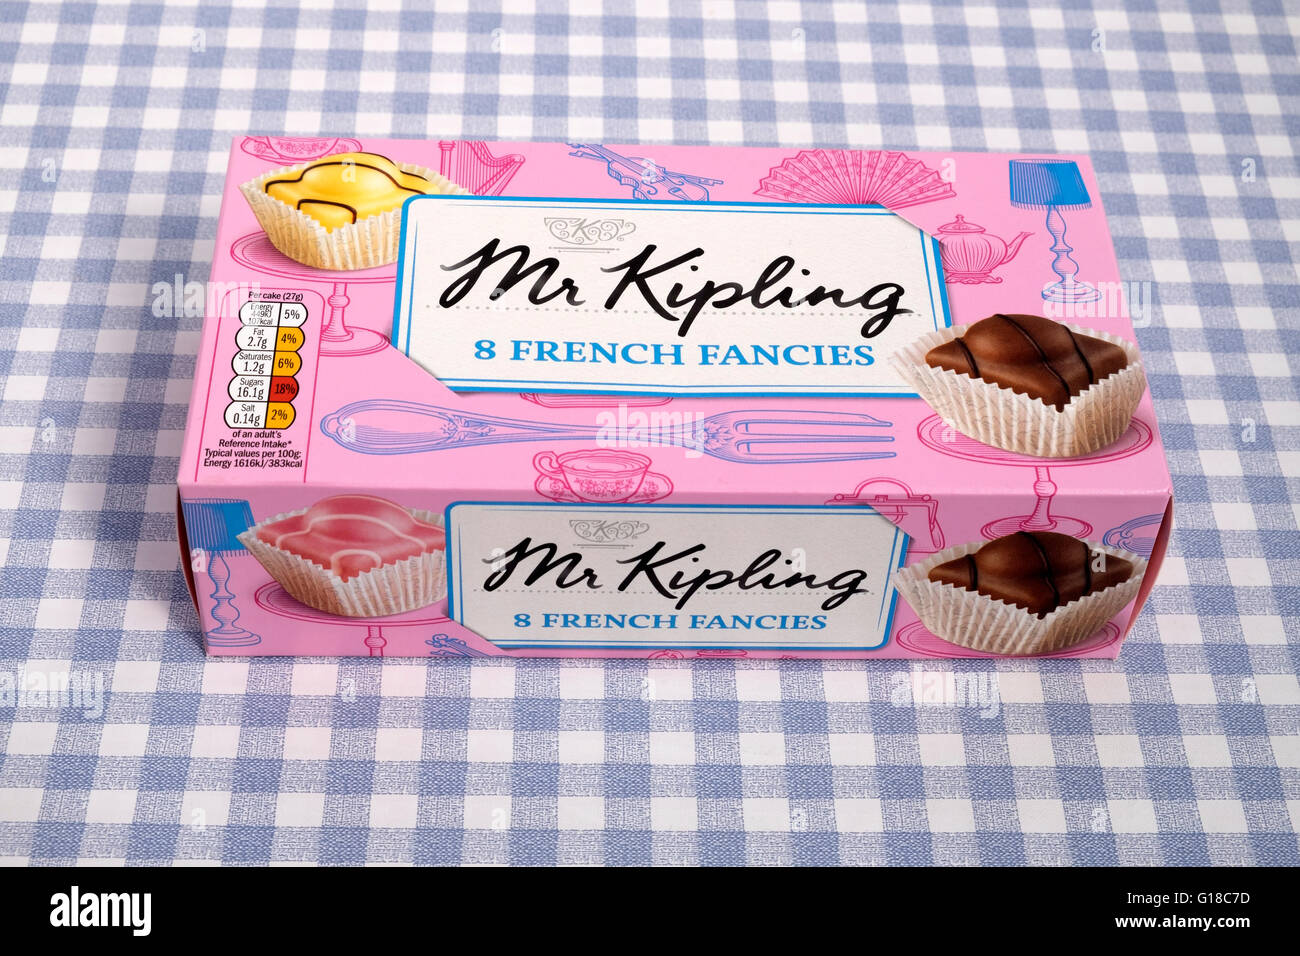 Mr Kipling French Fancies cakes Stock Photo